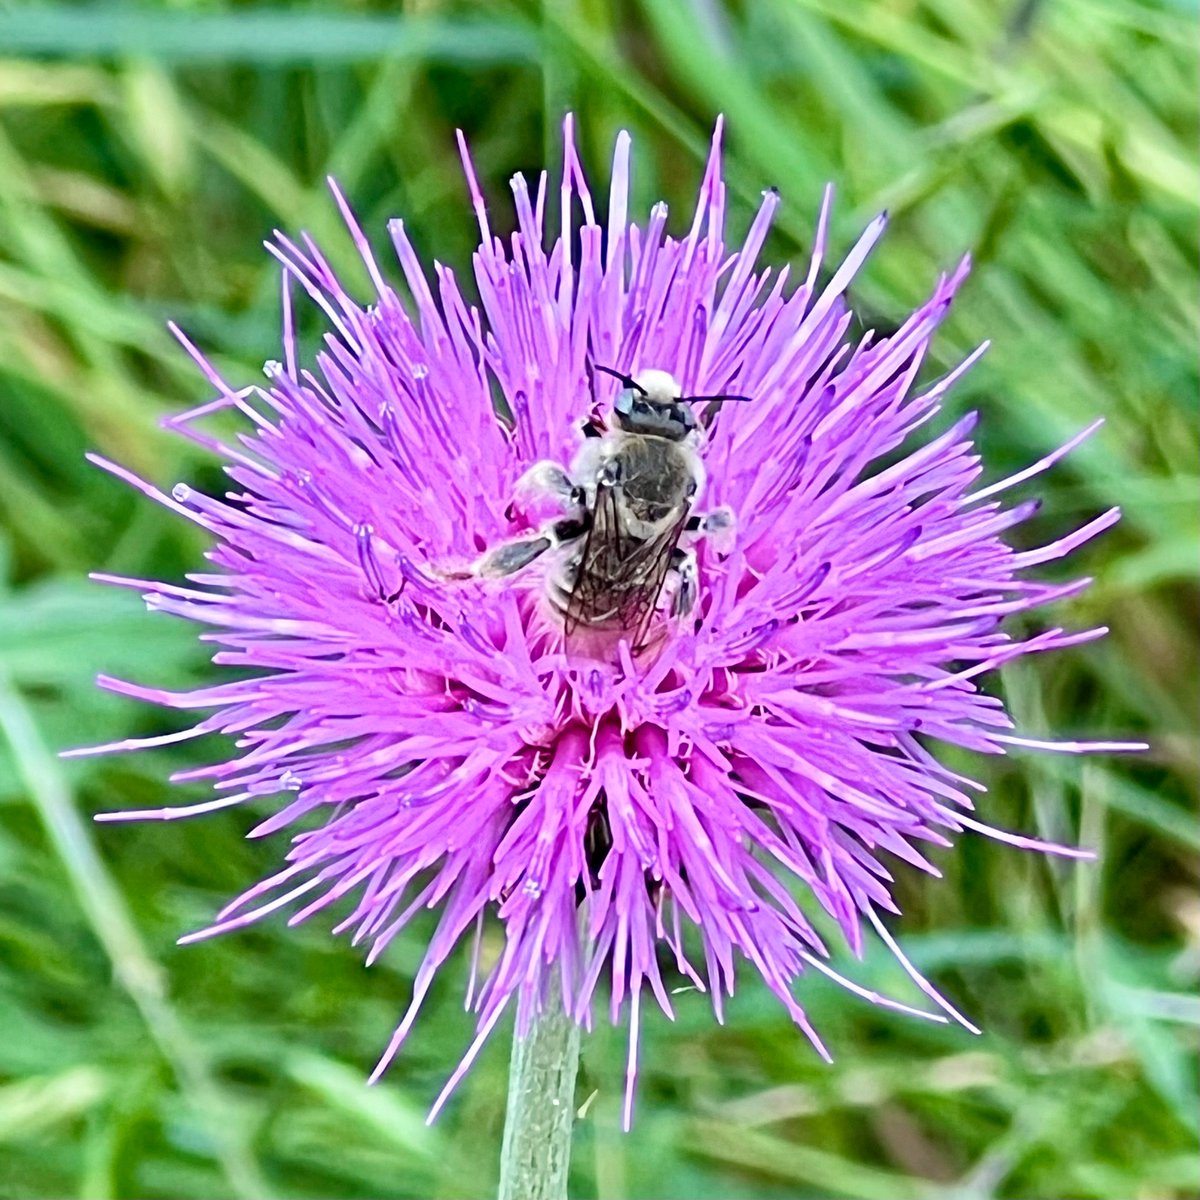 I found a sleeping bee. 
#HoneyBee #SleepingBee #TexasWildflowers #PurpleThistle #TexasSpring
#PossumKingdomLake